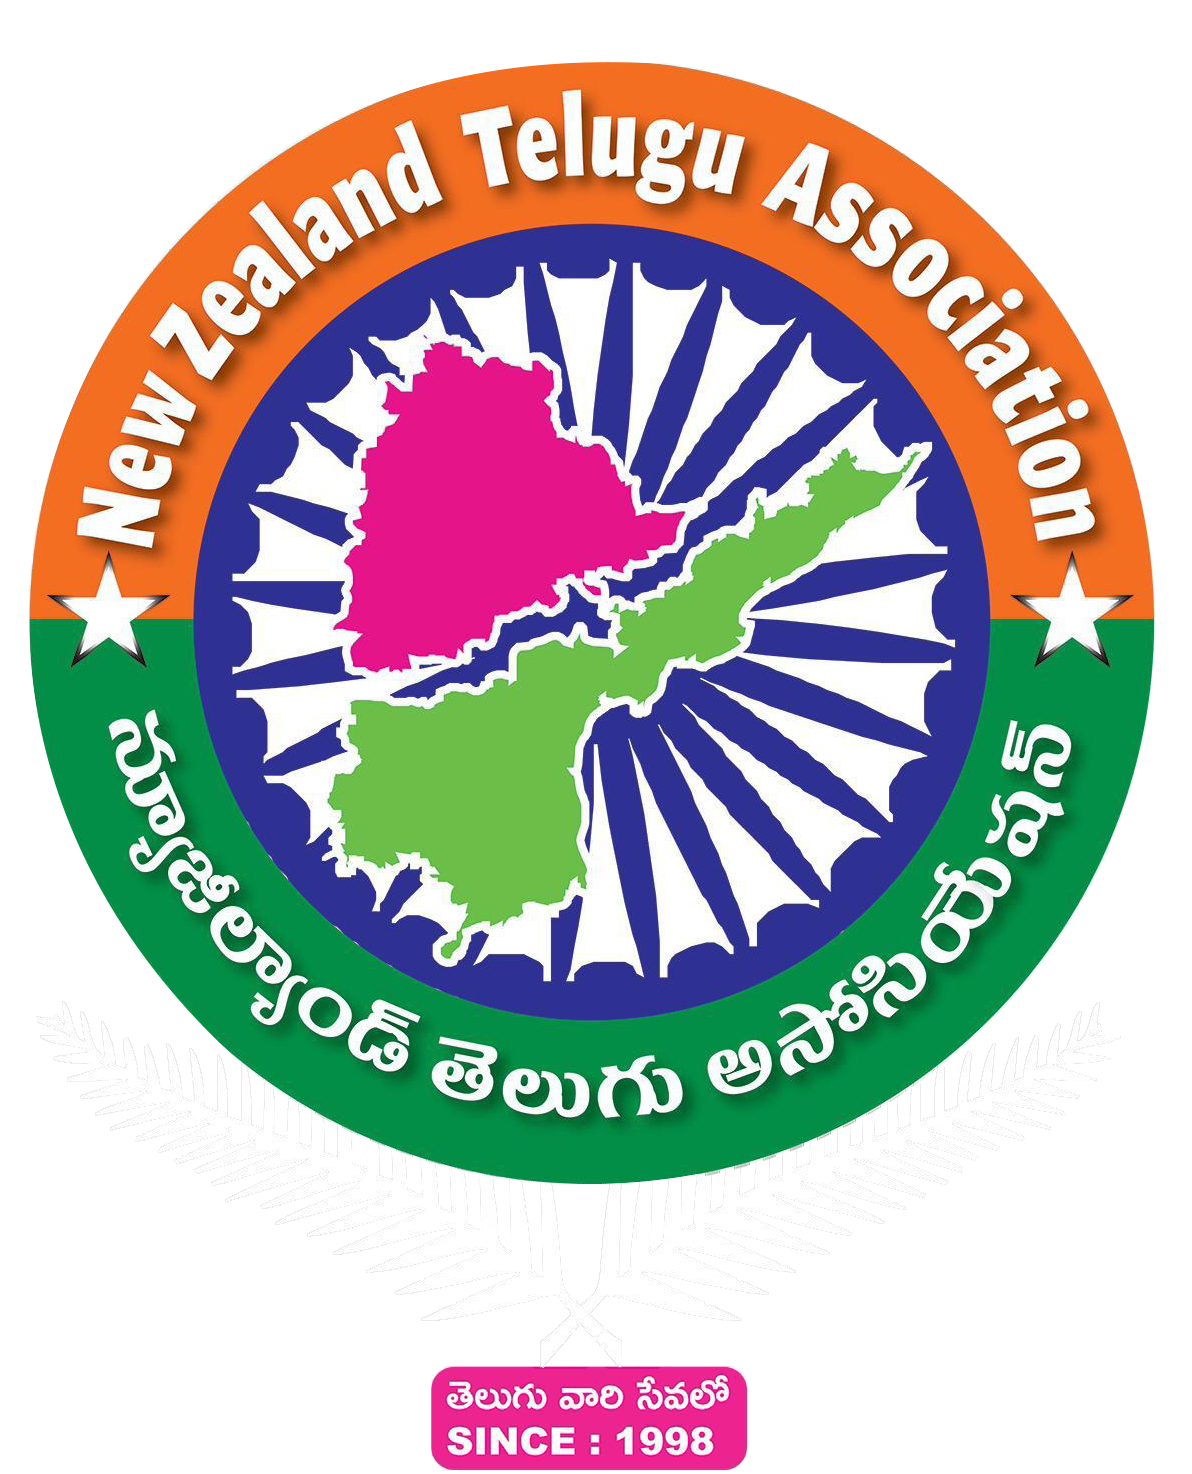 New Zealand Telugu Association